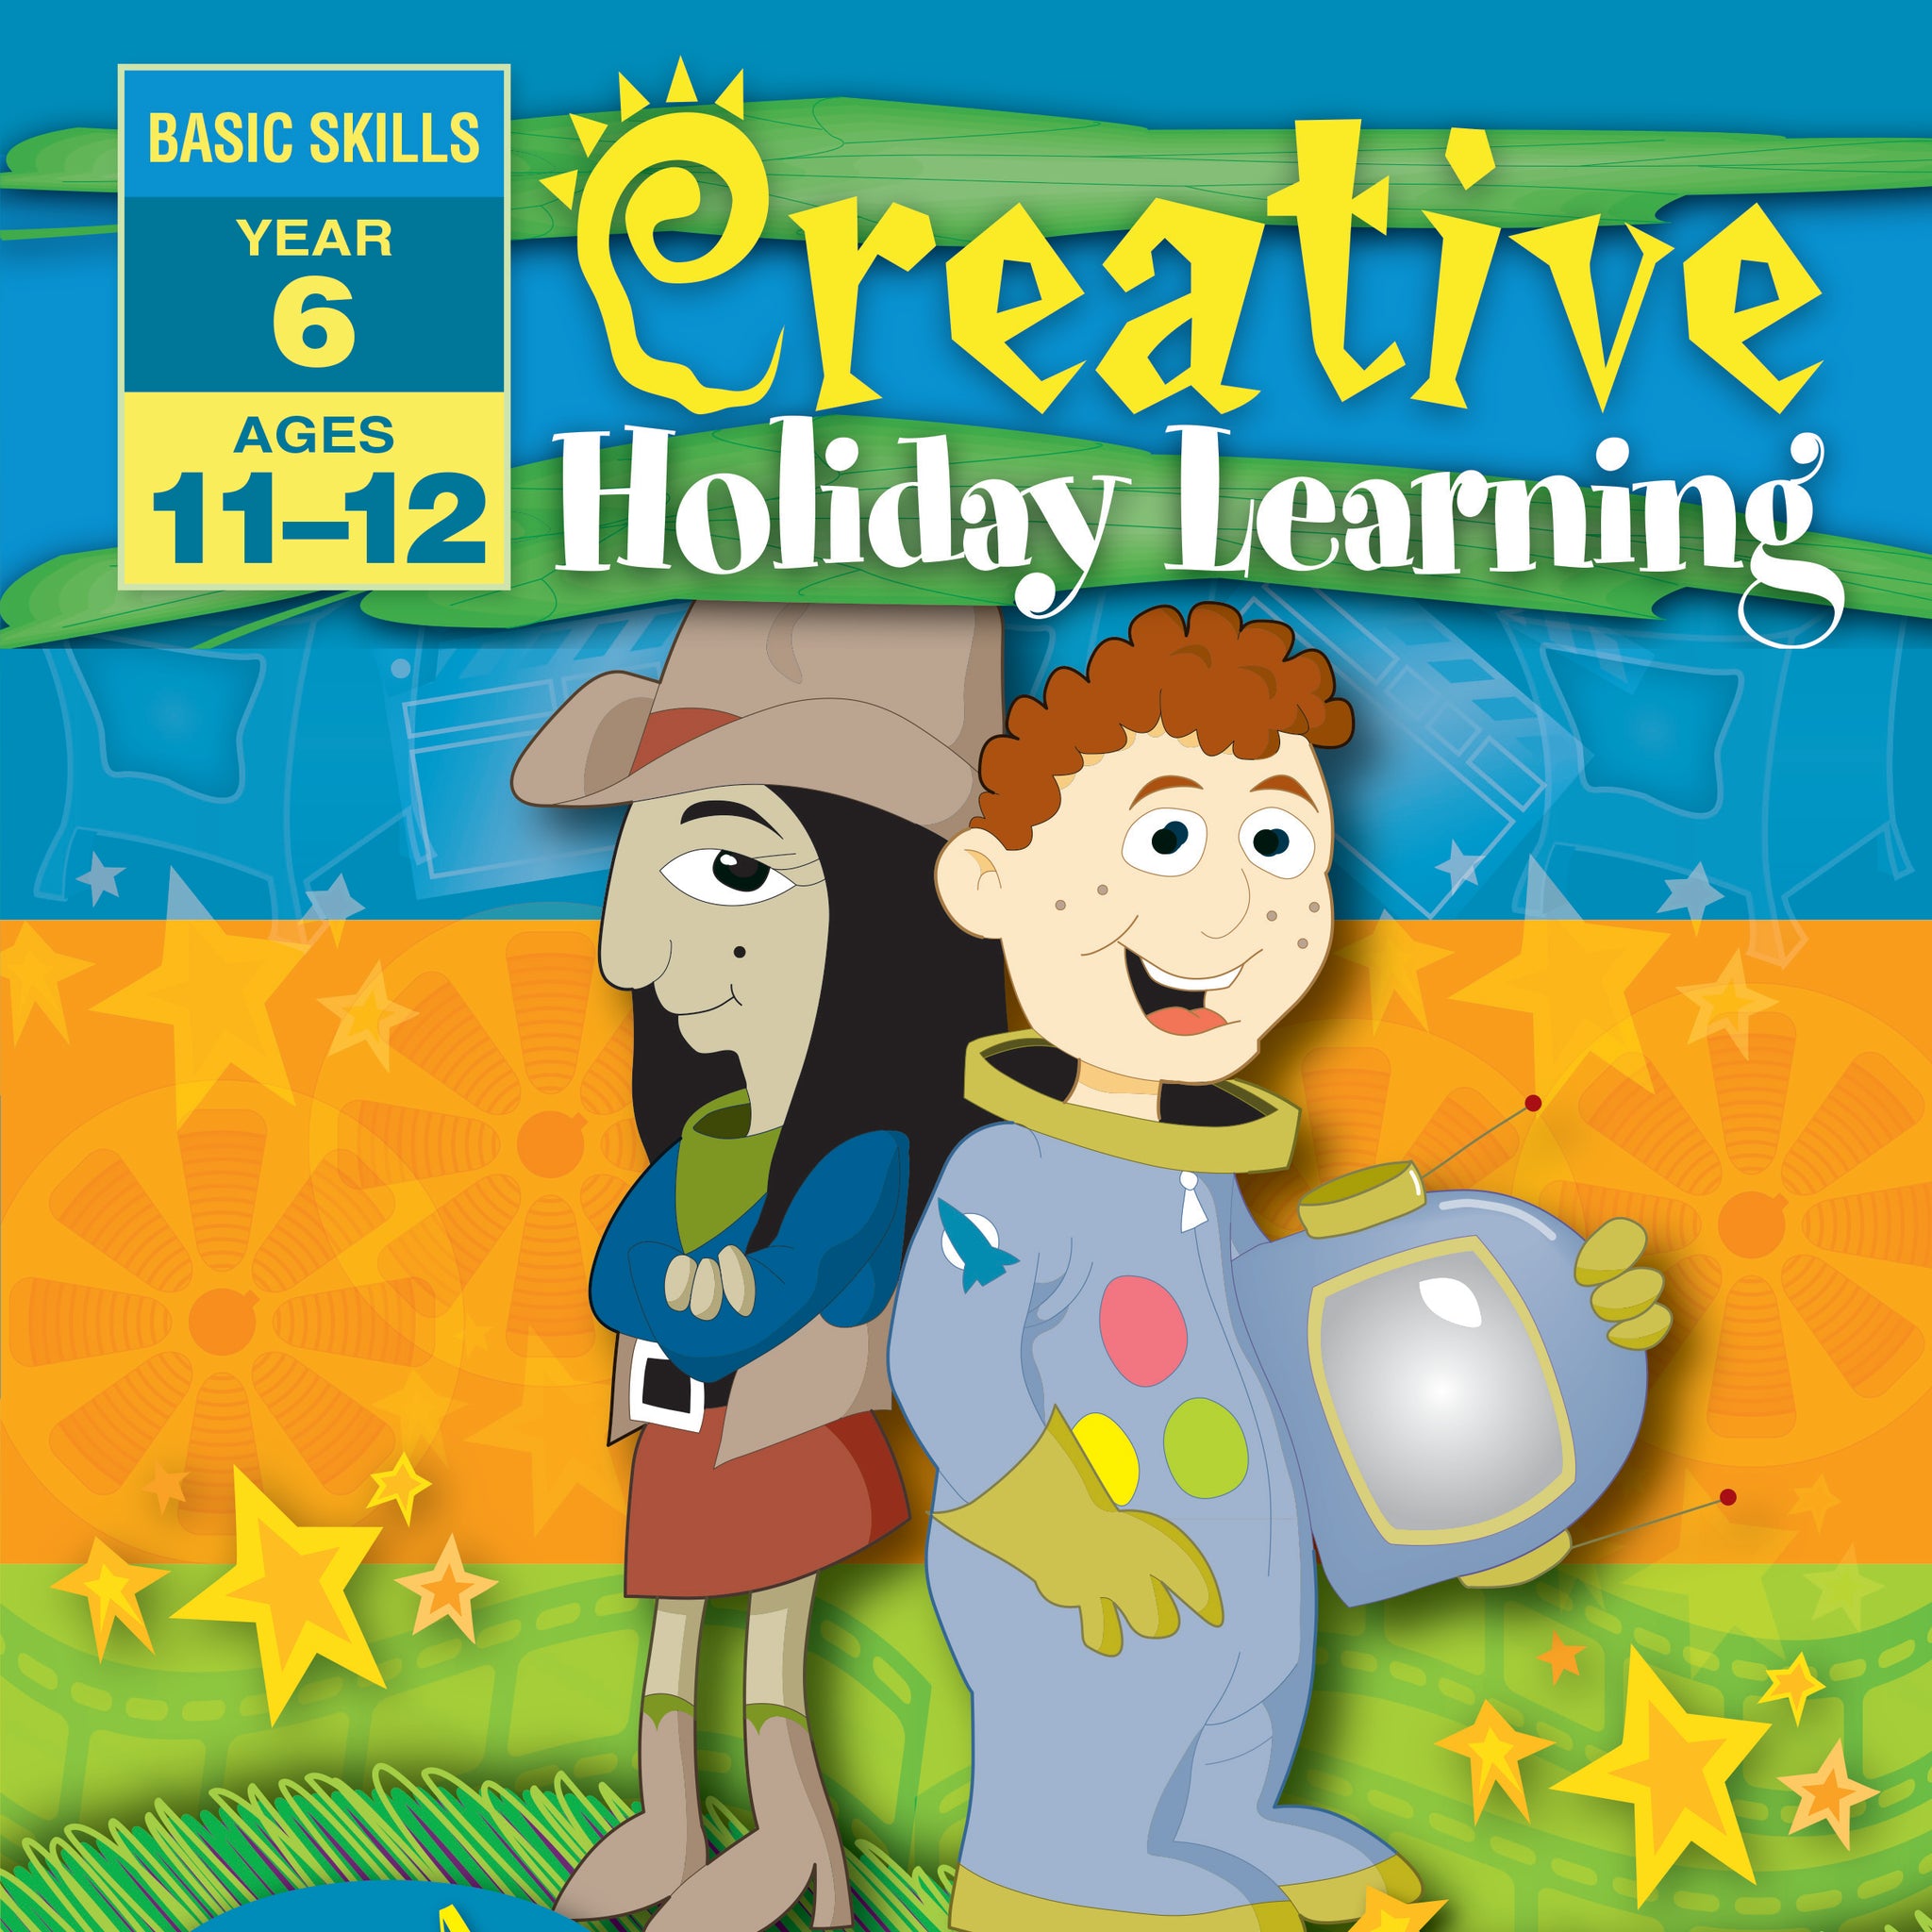 Excel Basic Skills Workbook: Creative Holiday Learning Year 6